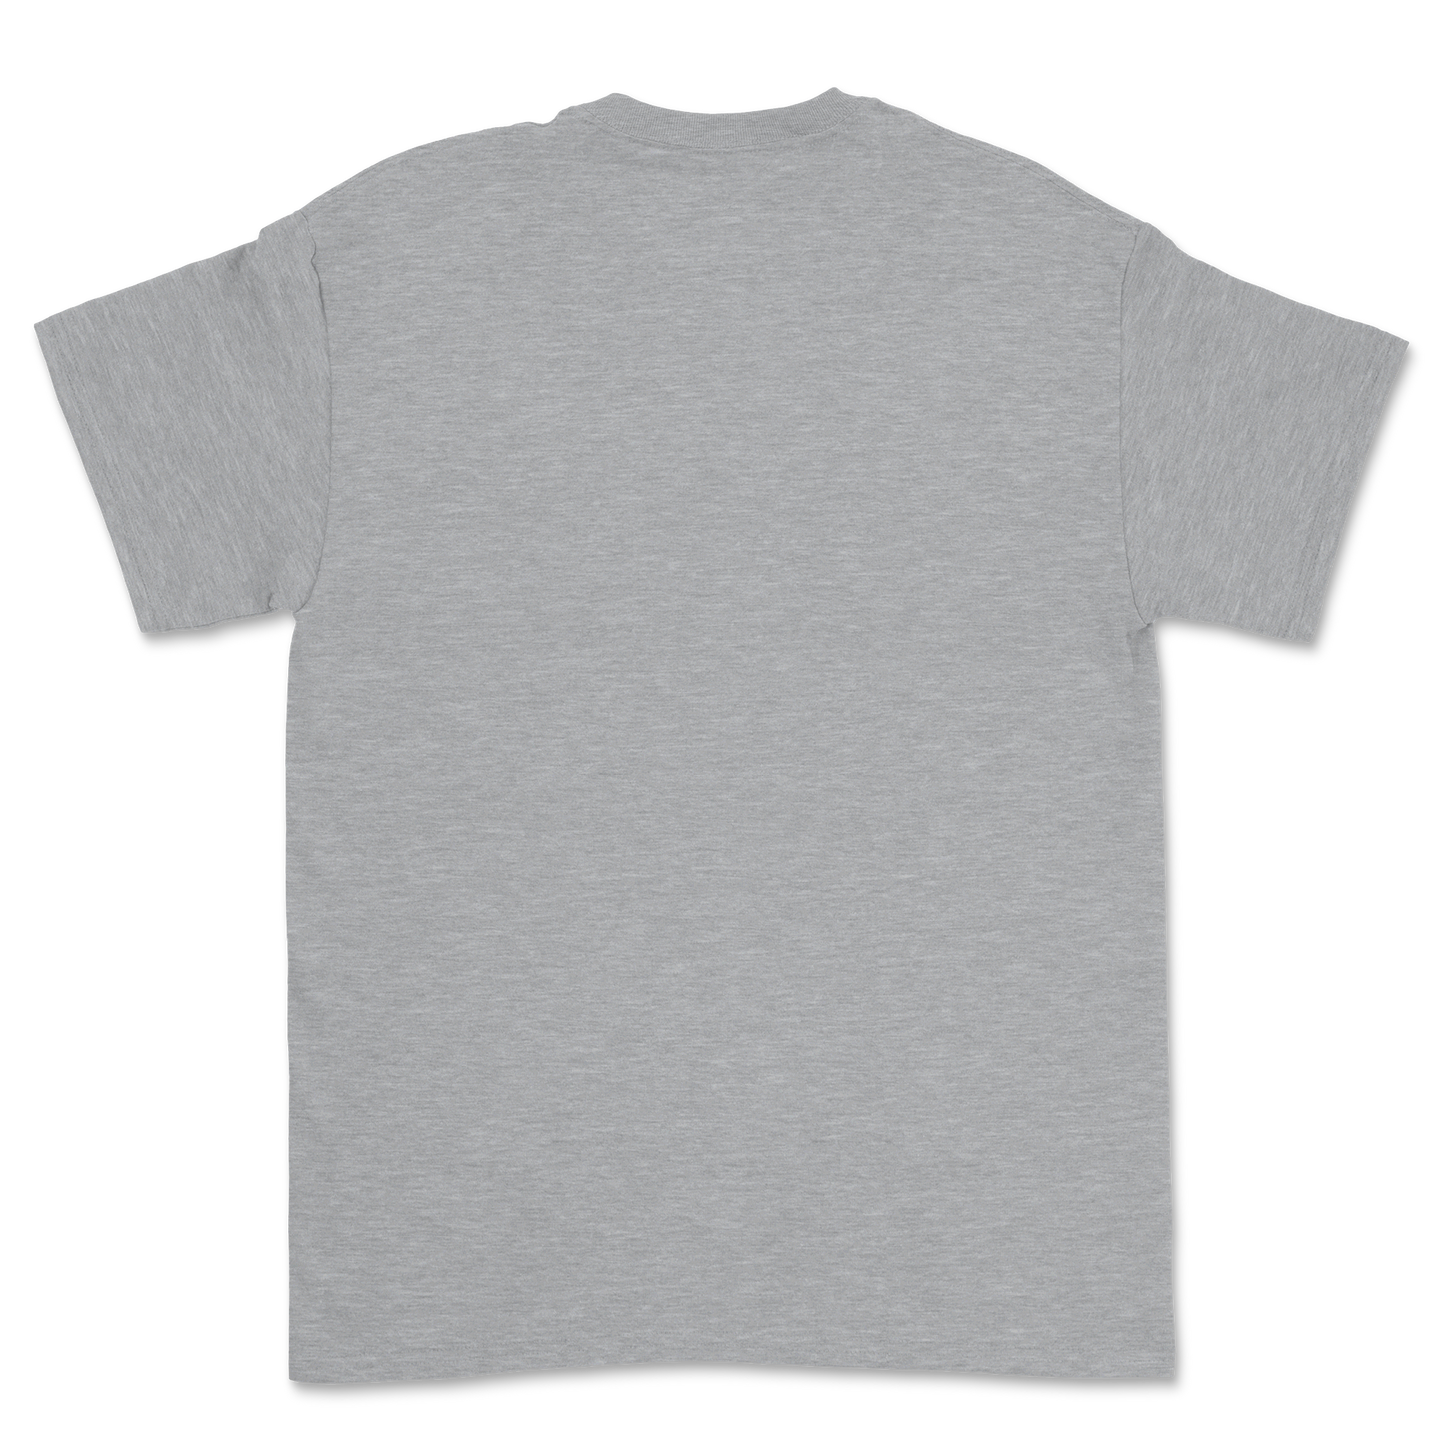 Make the Cut T-Shirt Grey